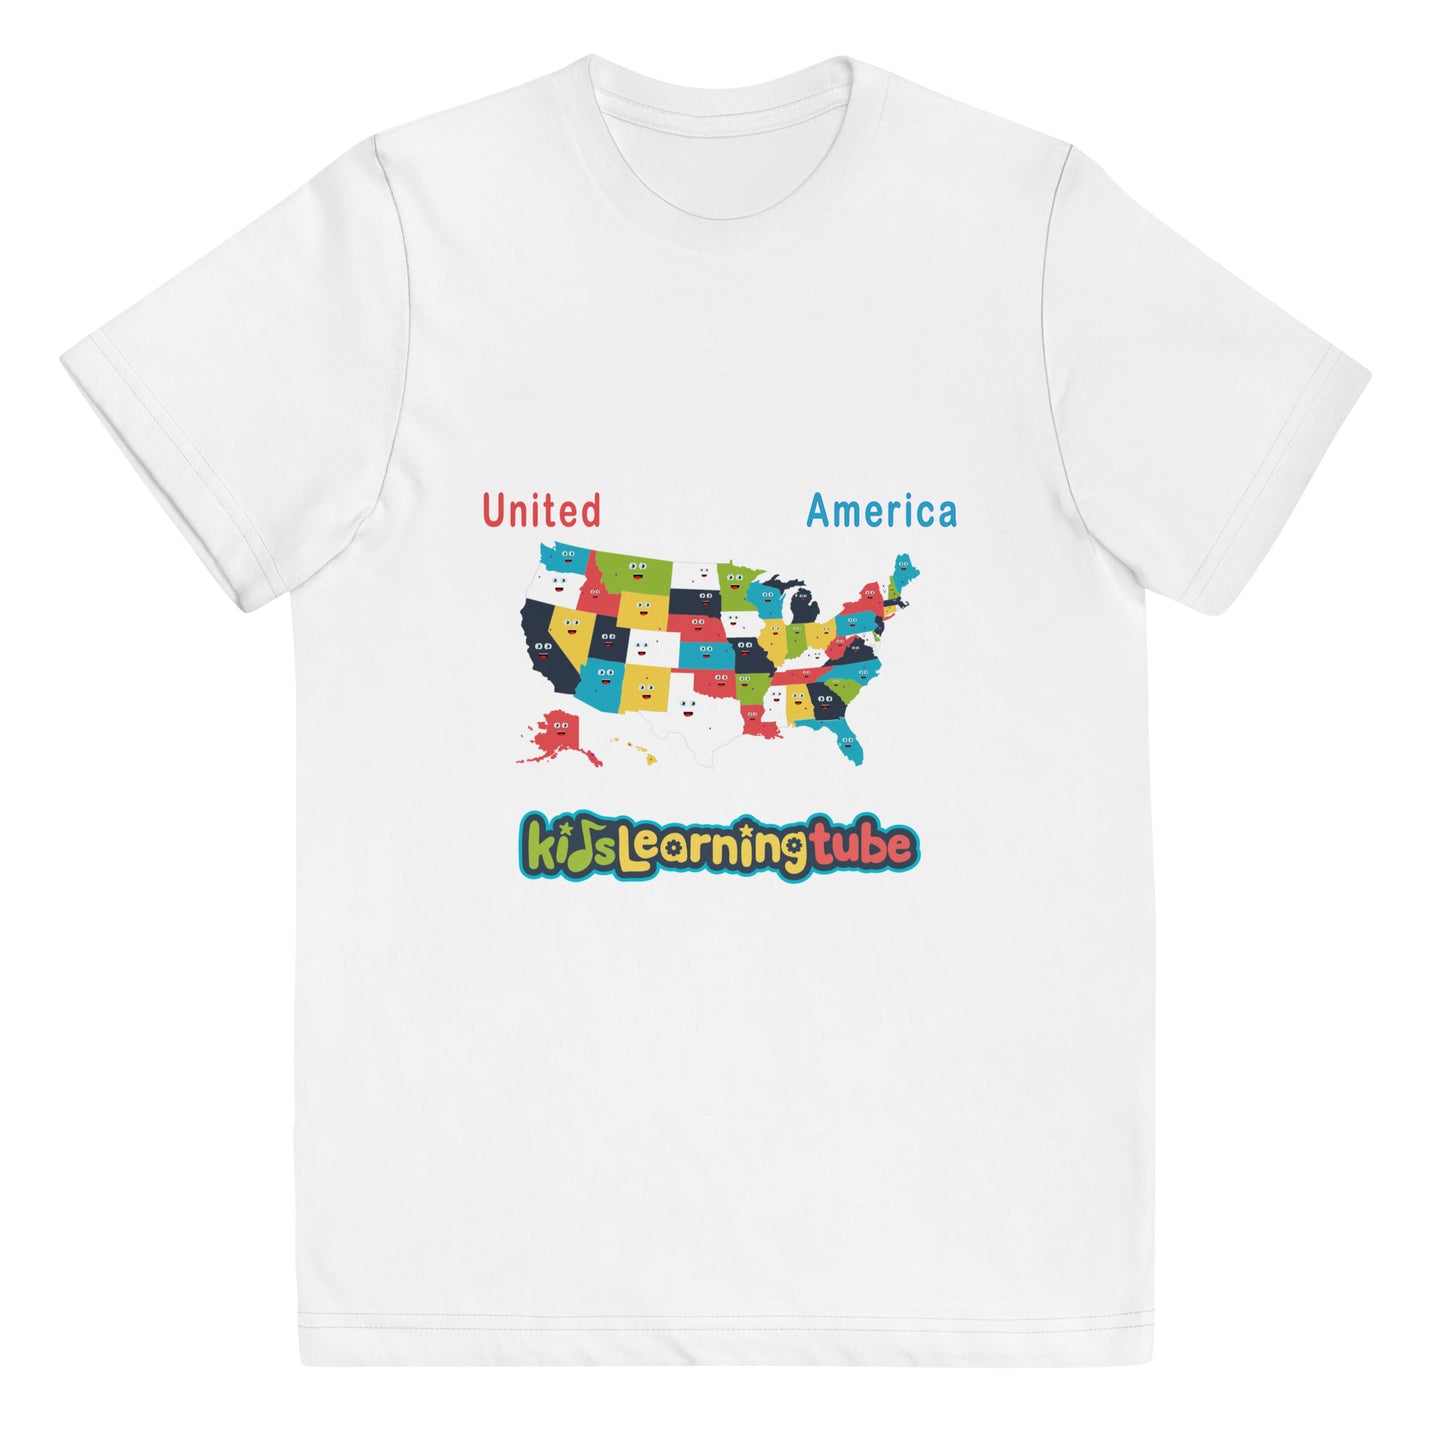 50 States - Youth jersey t-shirt